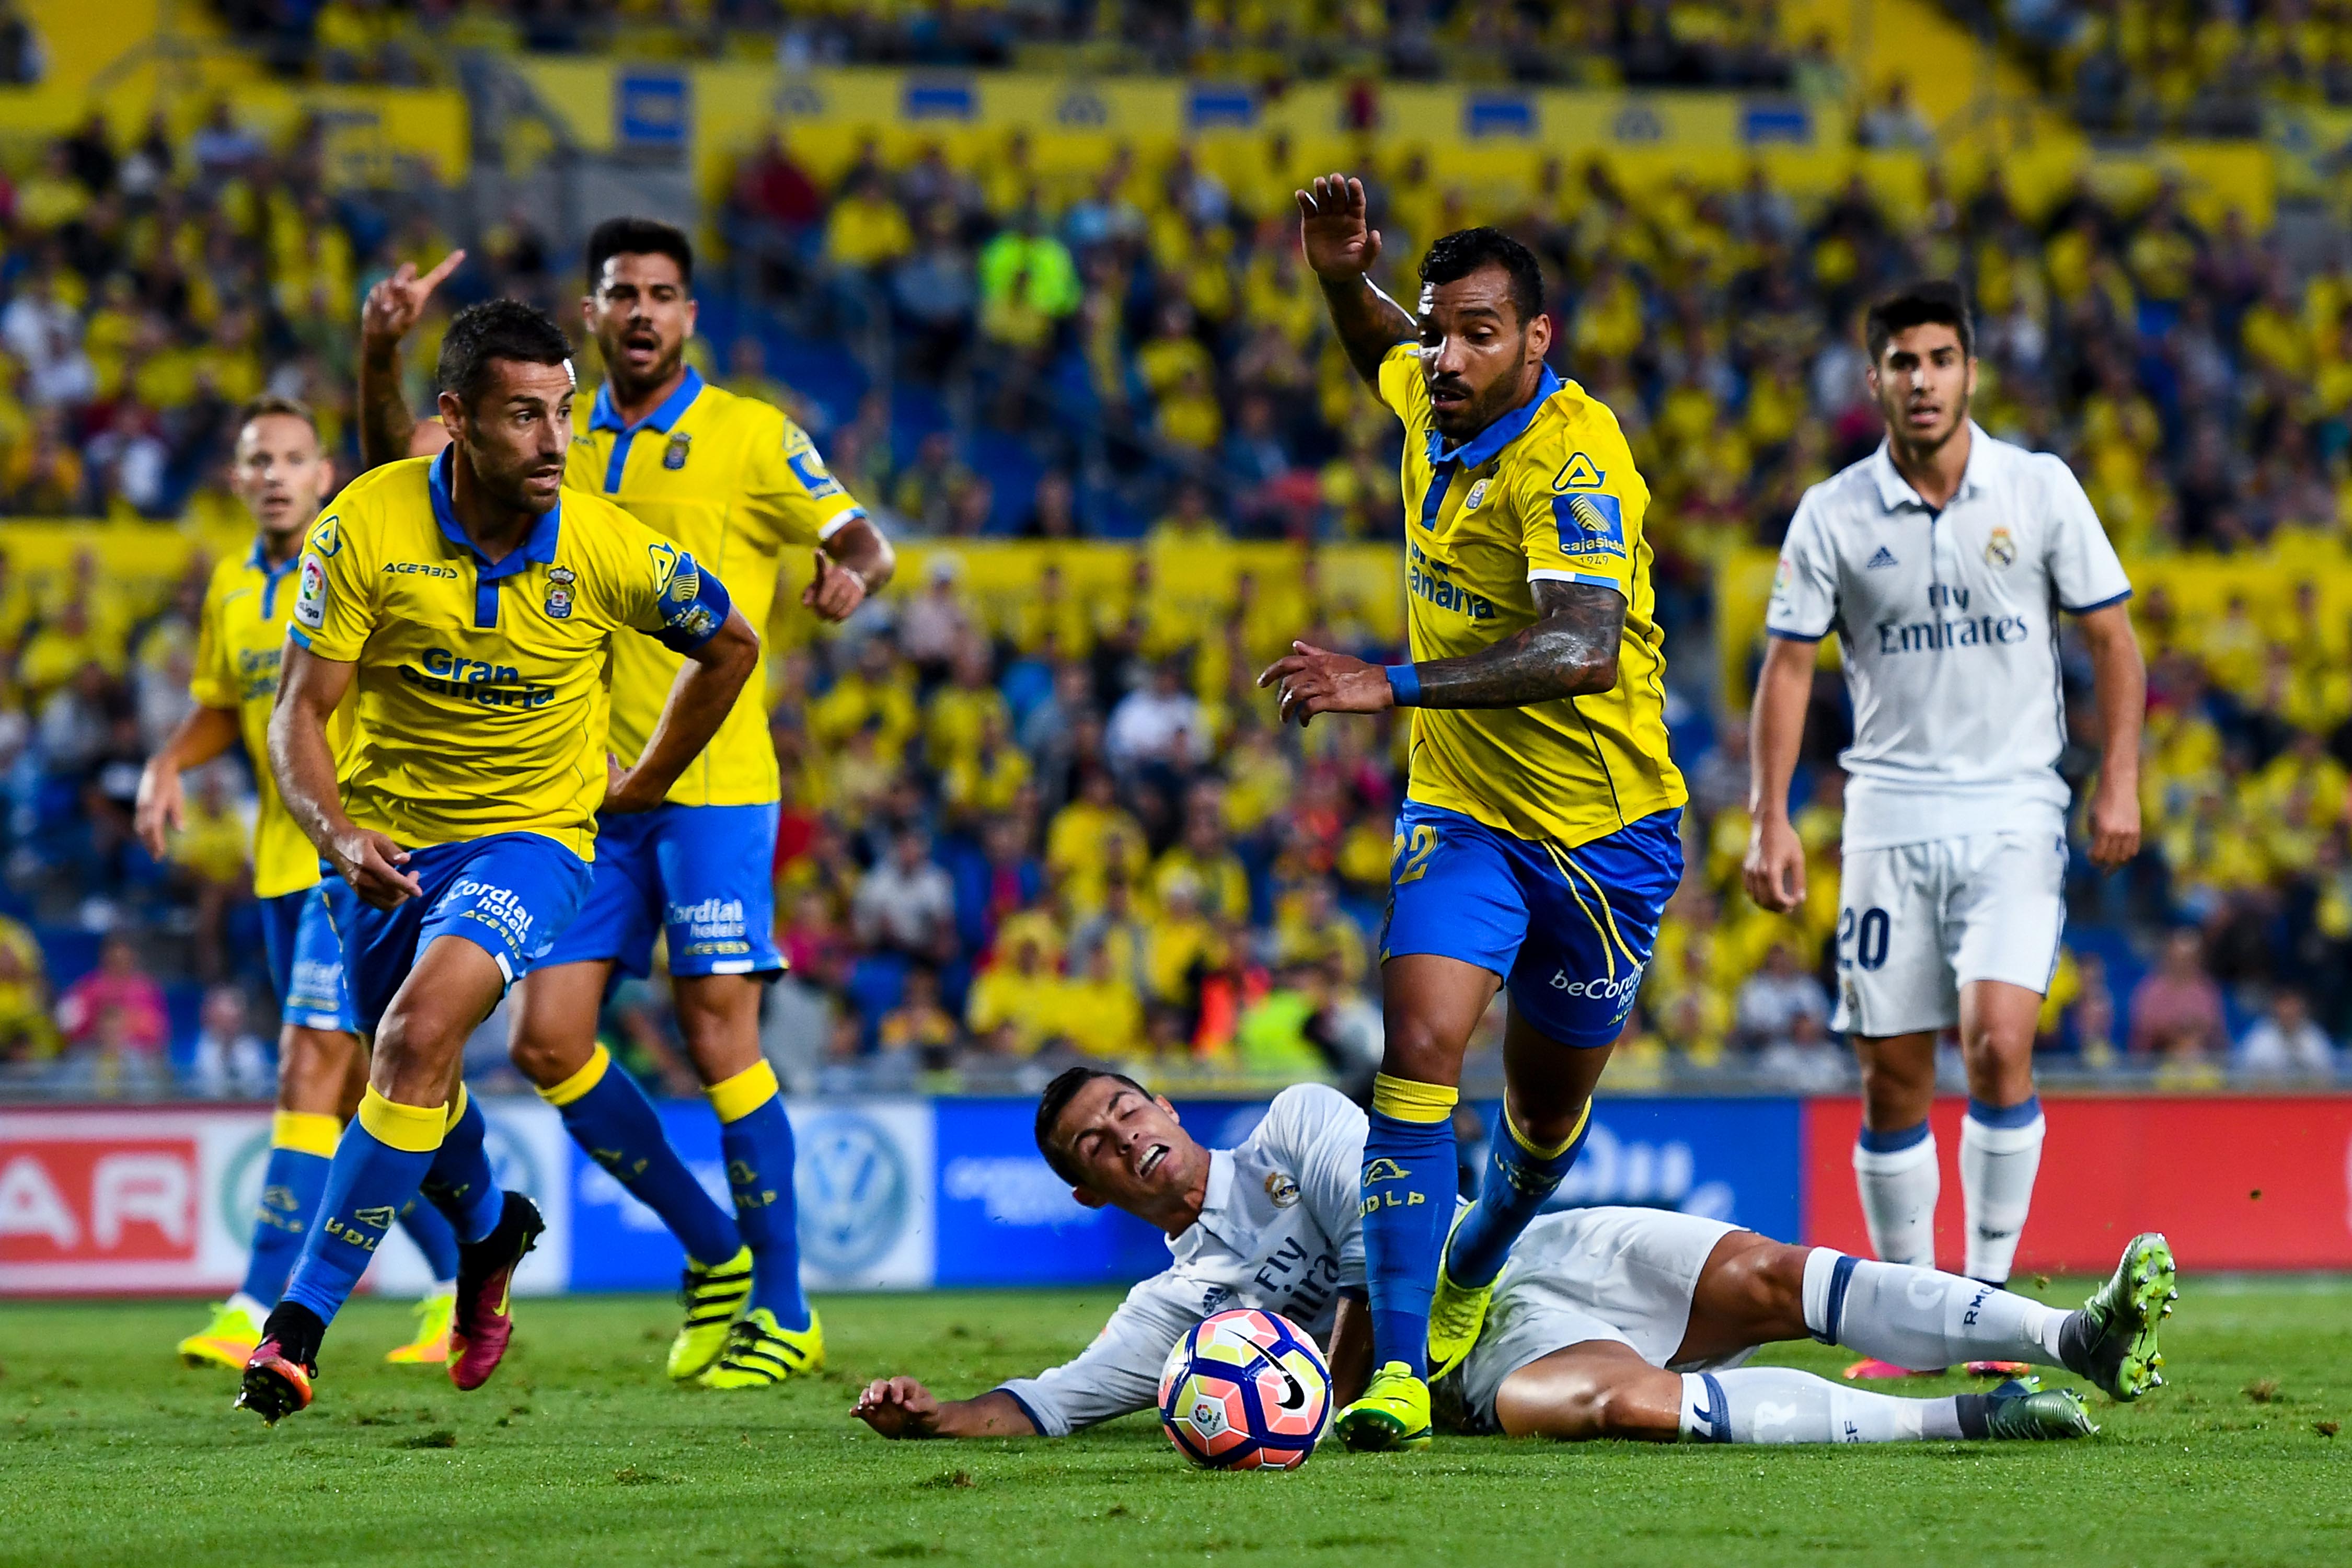 La Liga Roundup: Unhappy Ronaldo substituted in Las Palmas draw; Barcelona sans Messi thrash Sporting Gijon